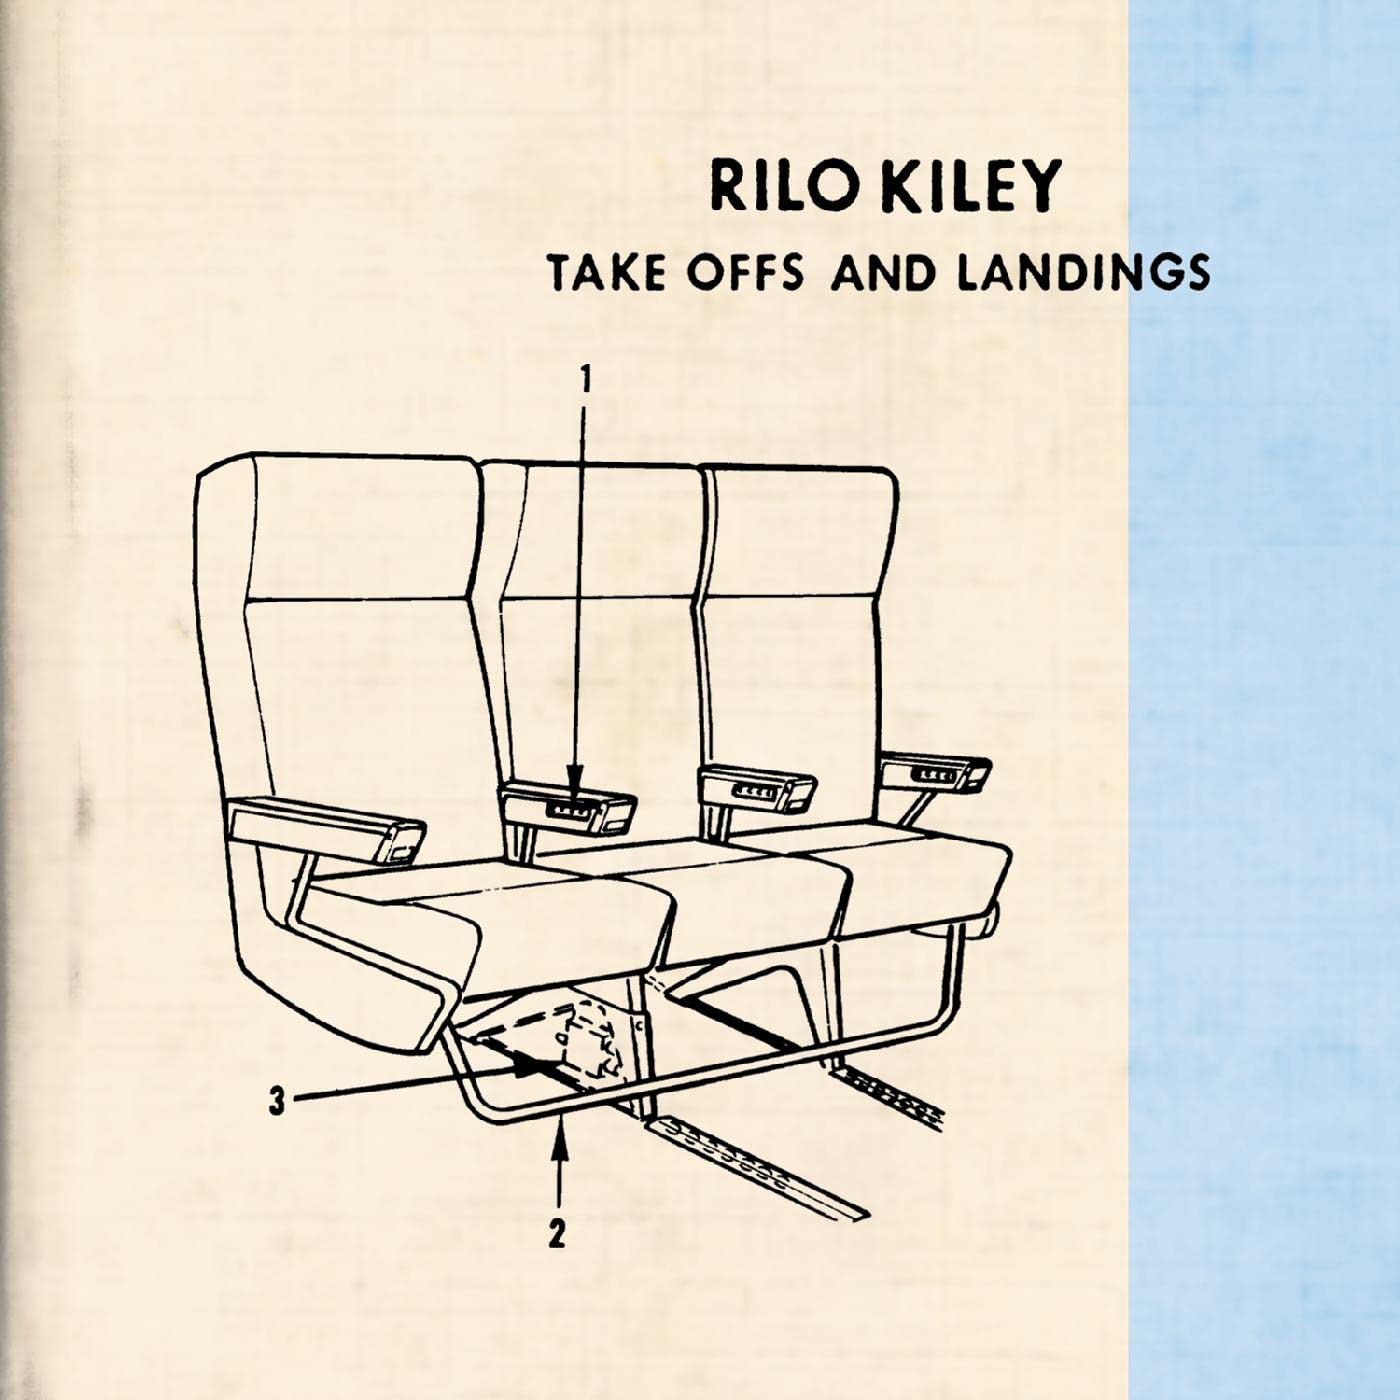 Rilo Kiley – Take Offs and Landings